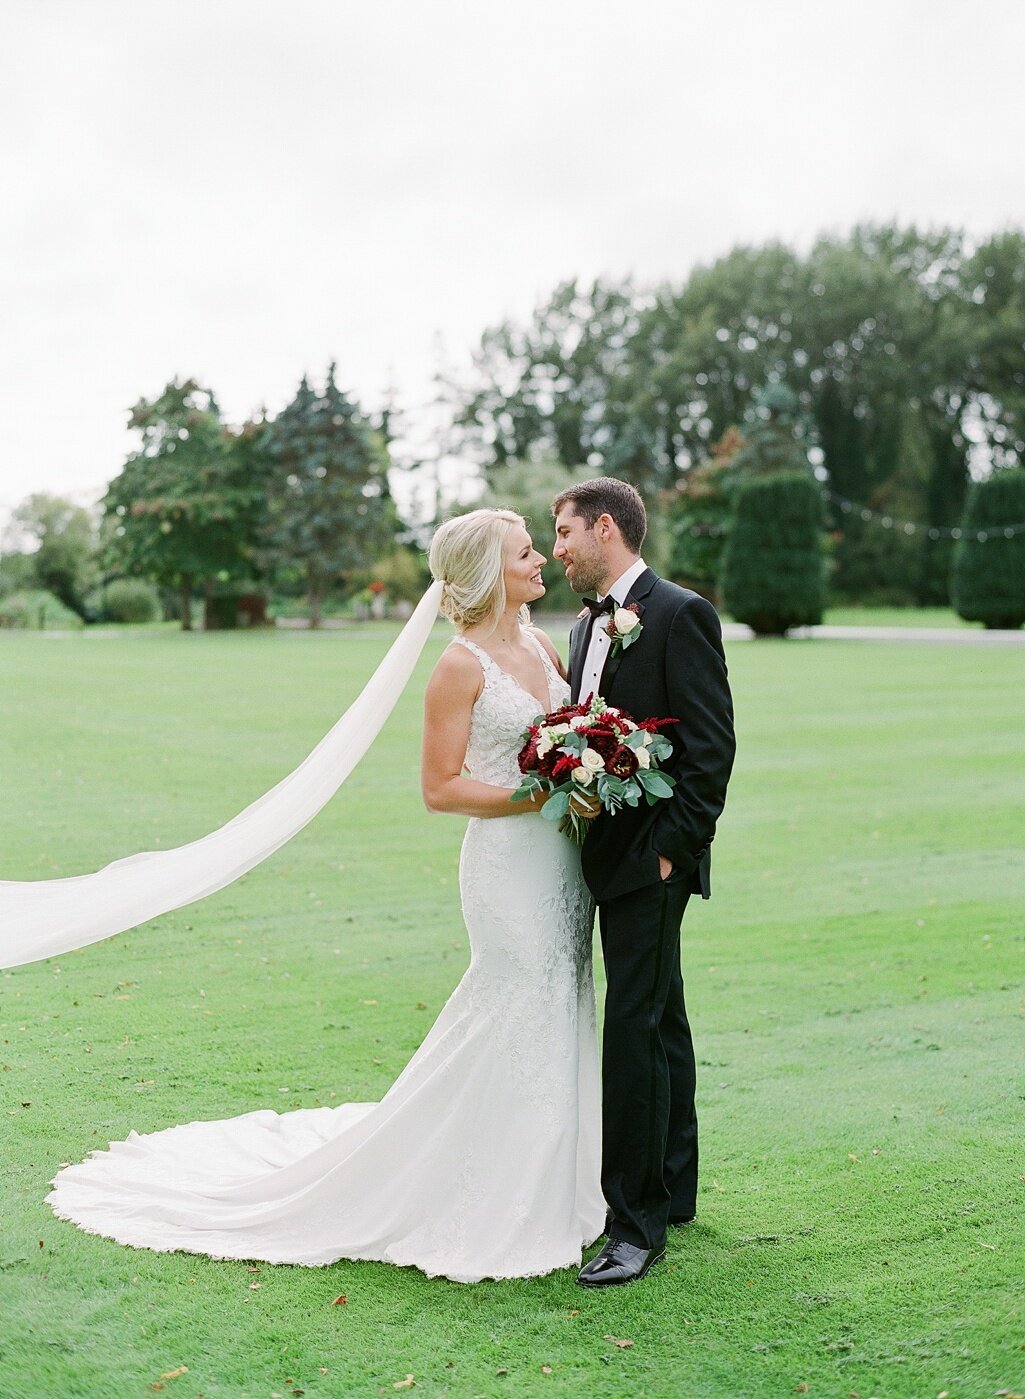 Jessie-Barksdale-Photography_K-Club-Ireland-Destination-Wedding-Photographer_0073